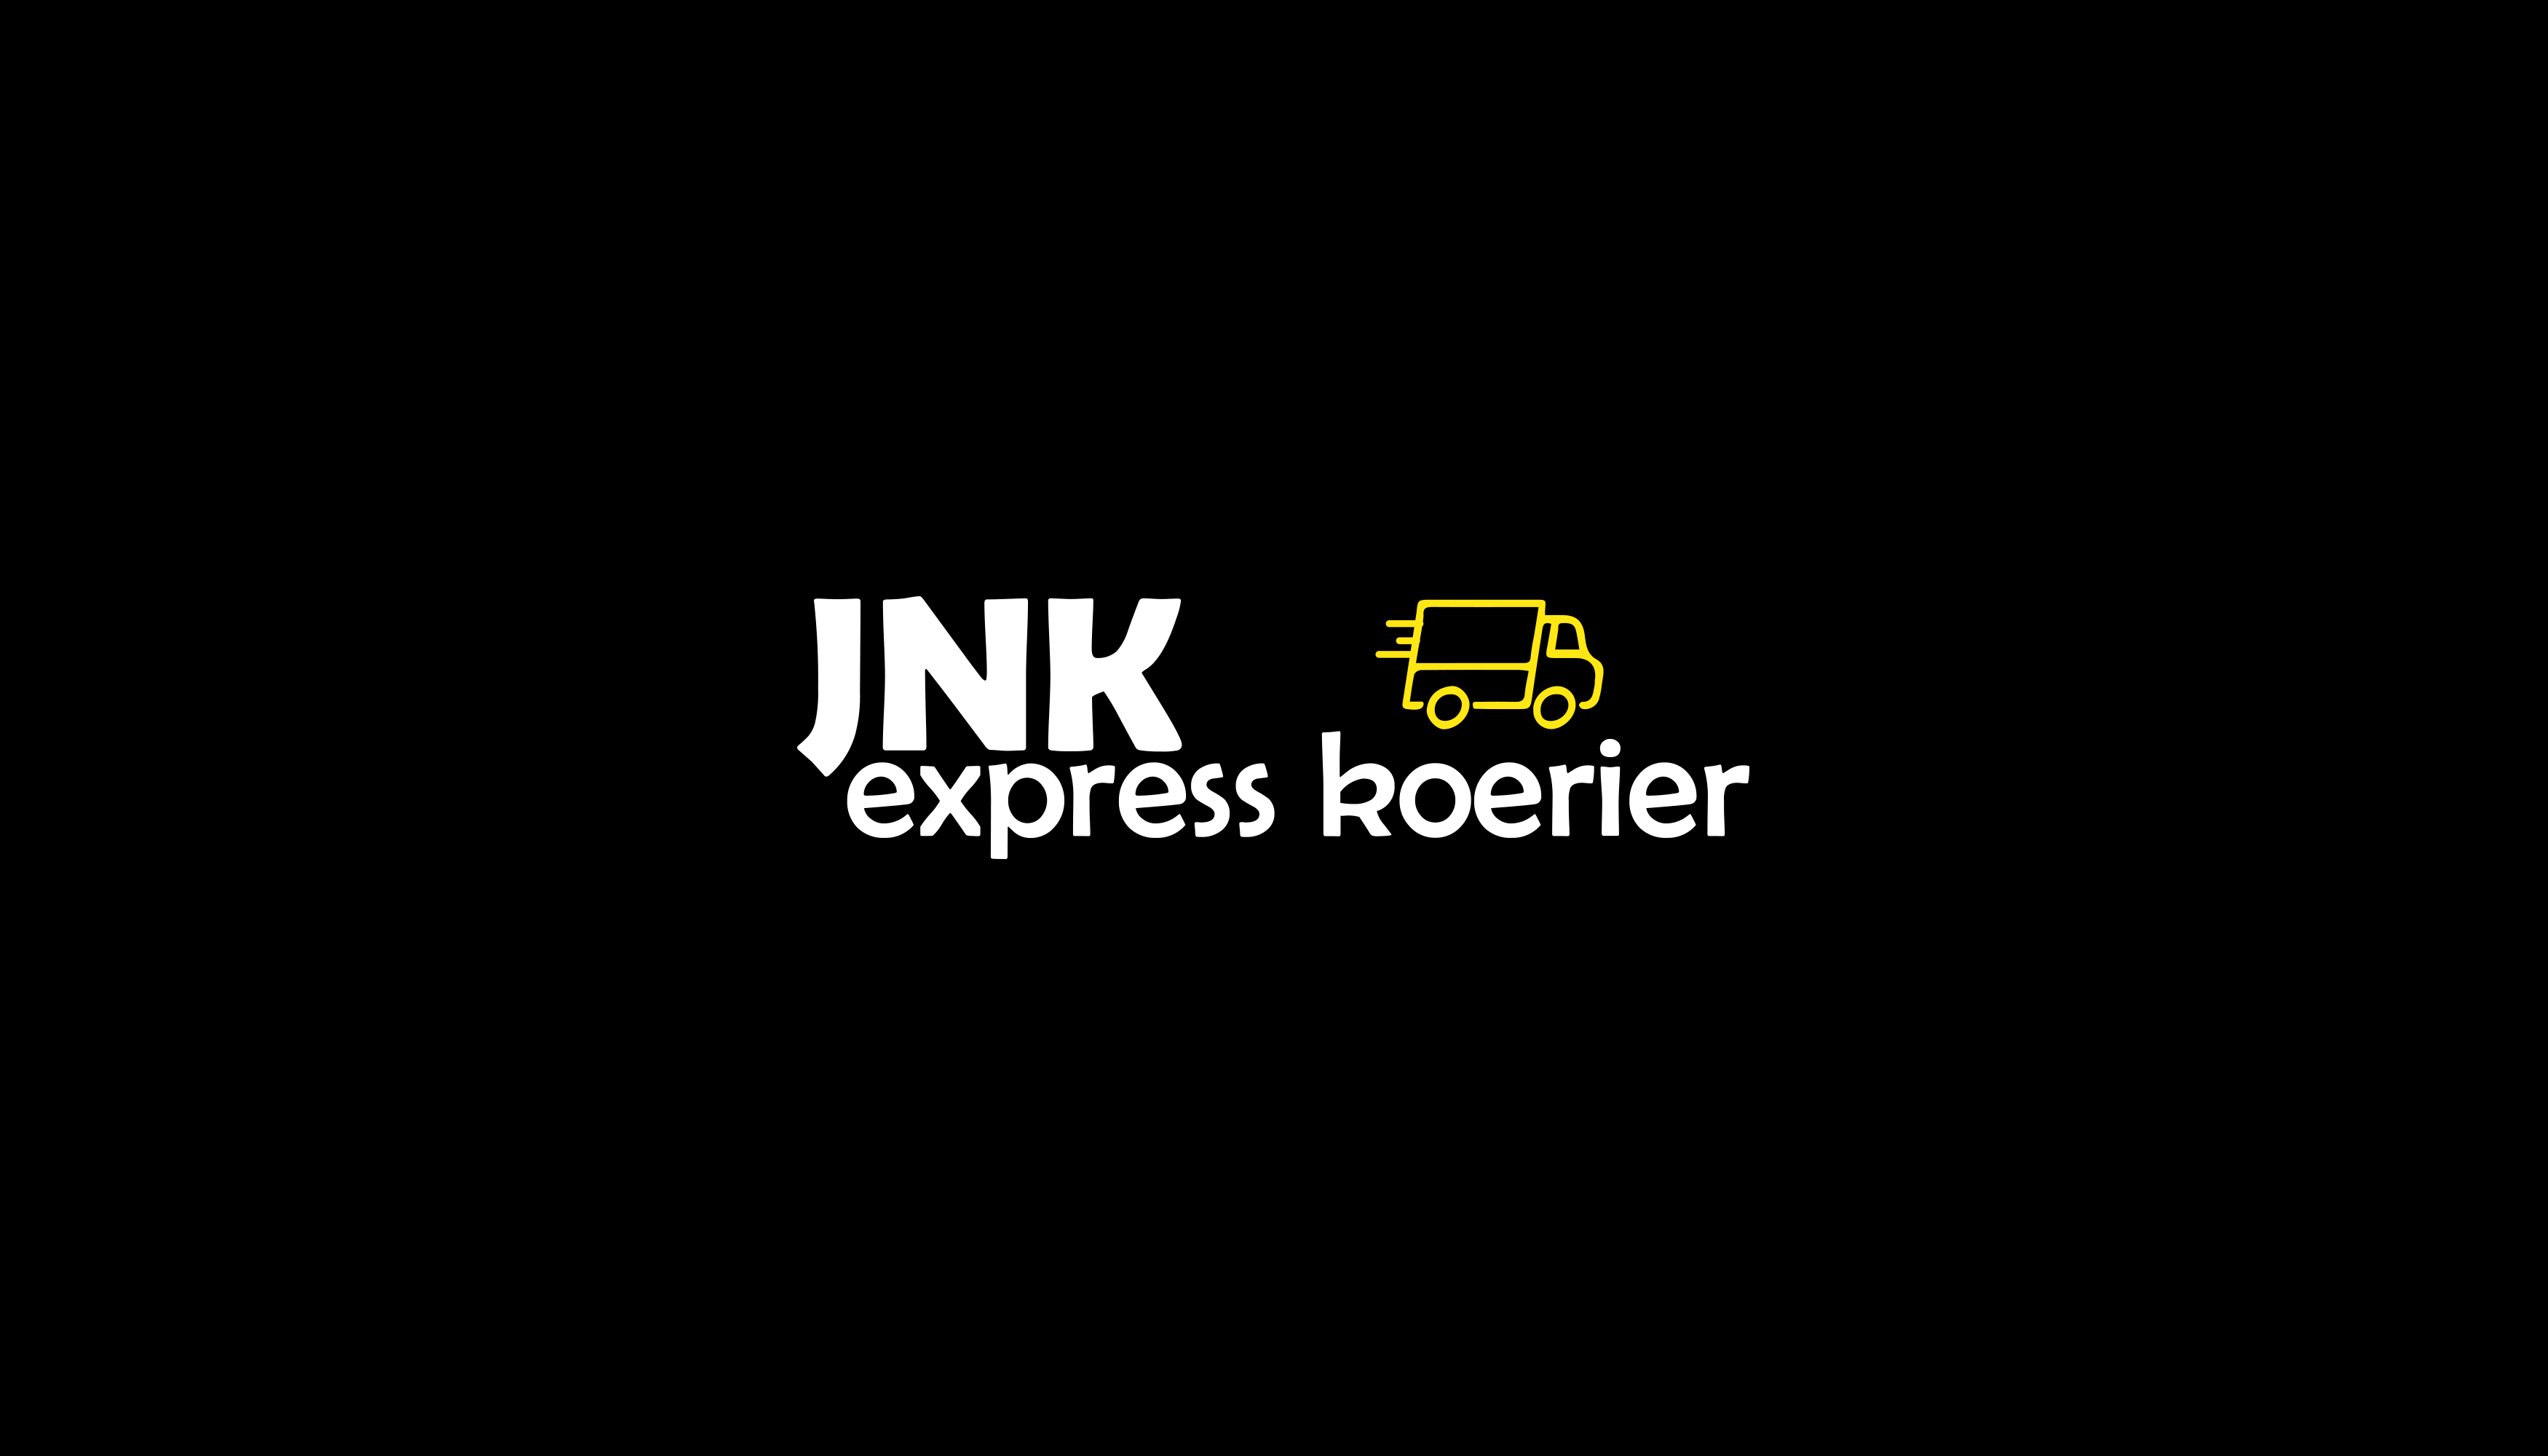 transportbedrijven Grammene | JNK Express Koerier